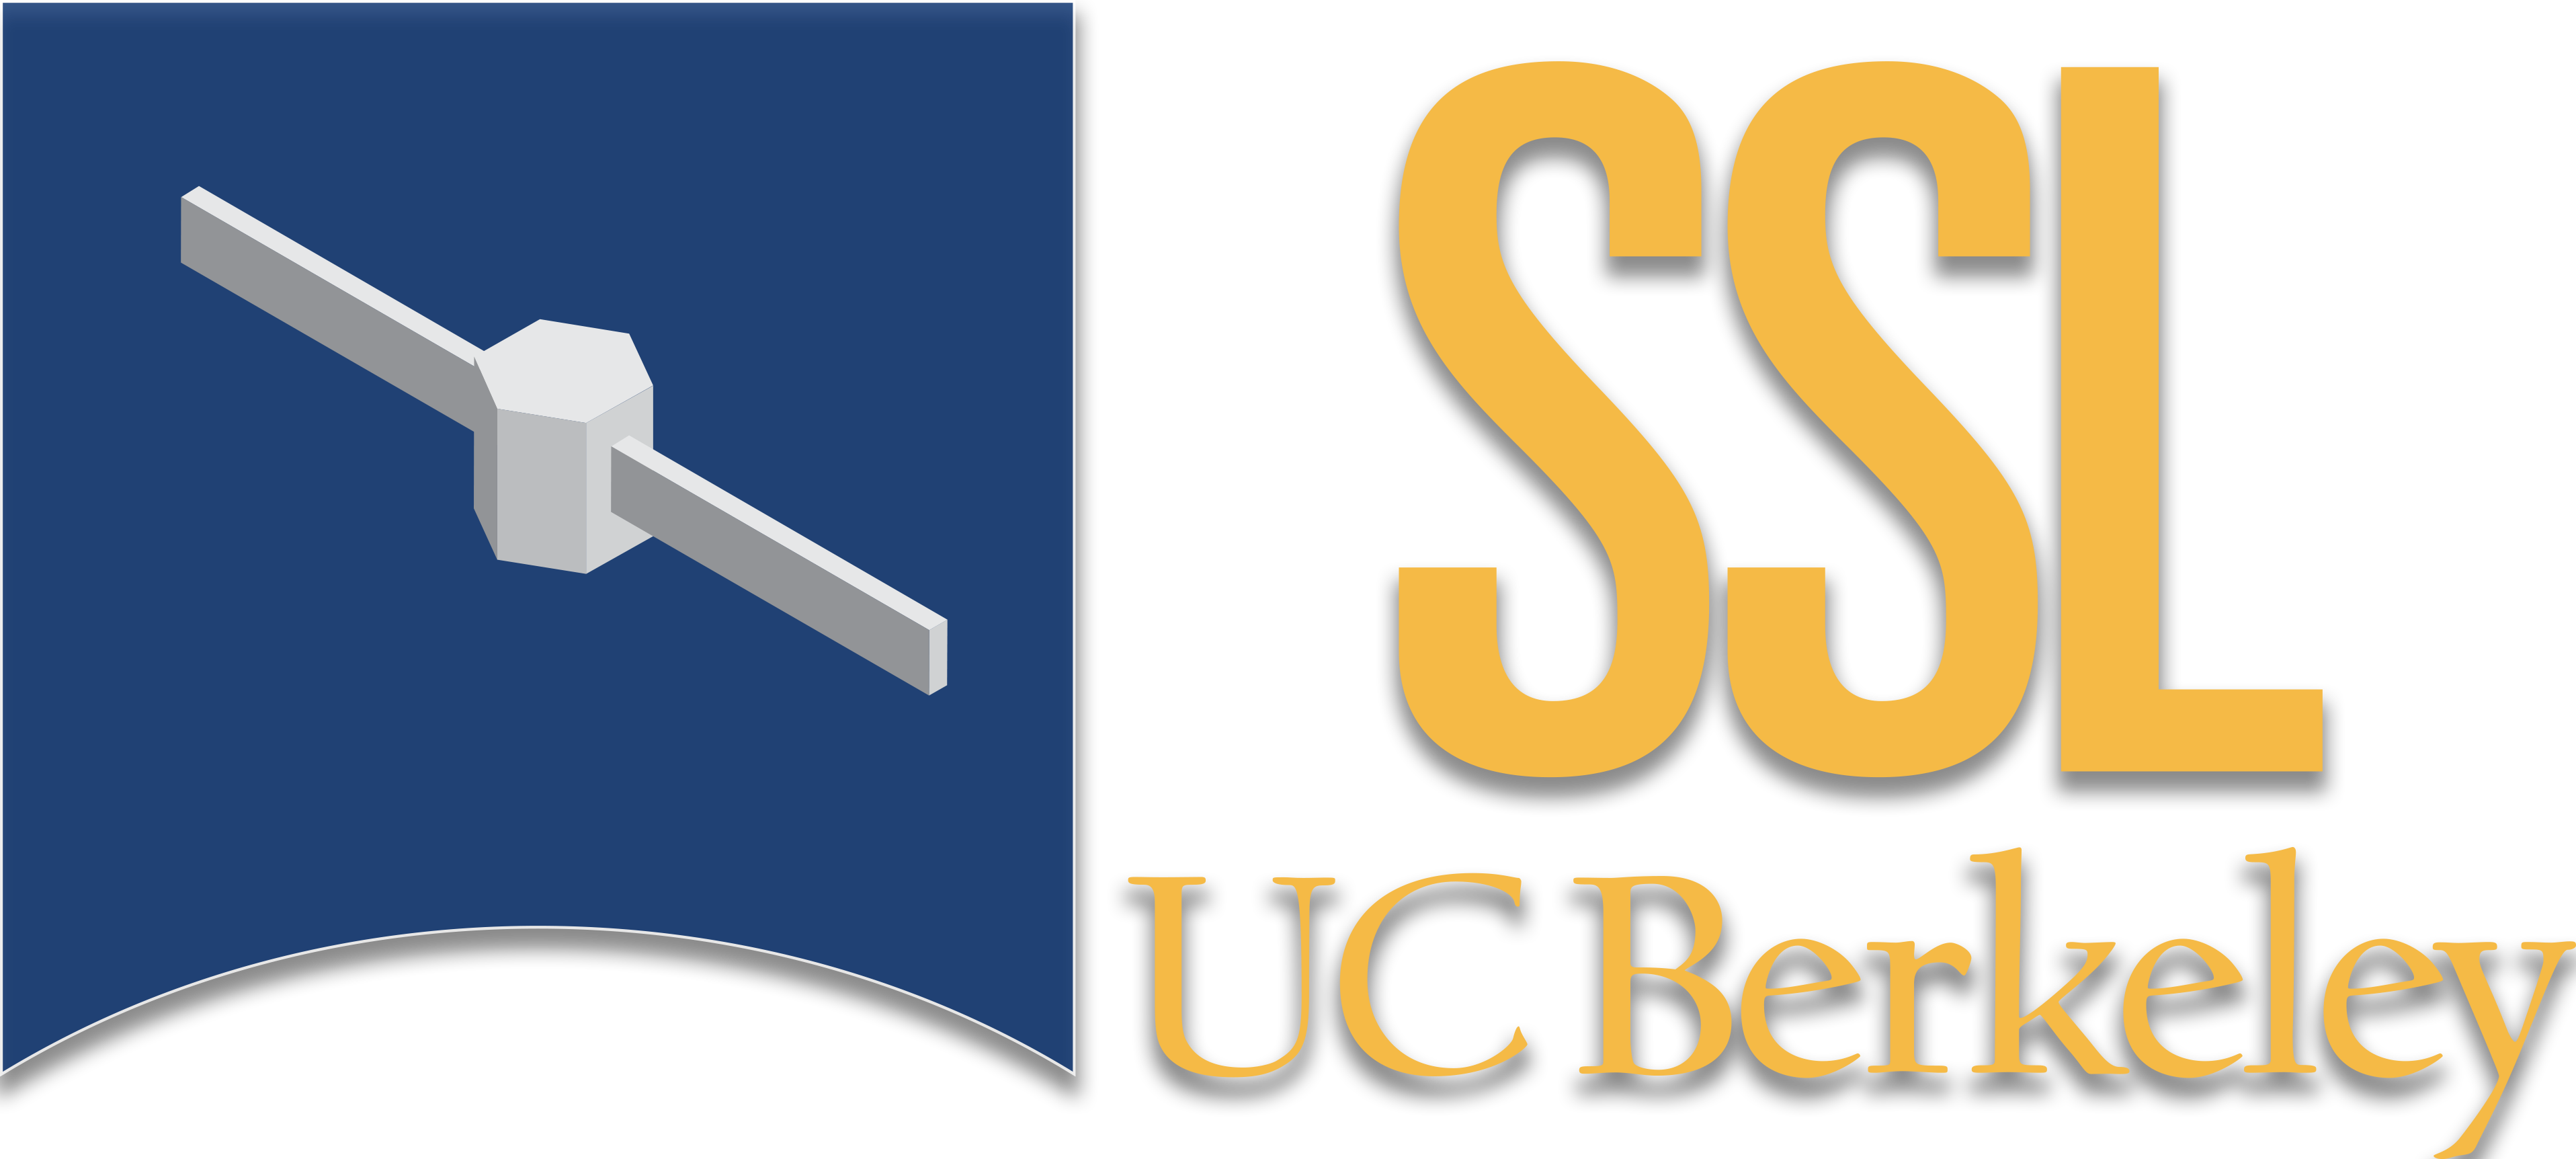 SSL UC Berkeley